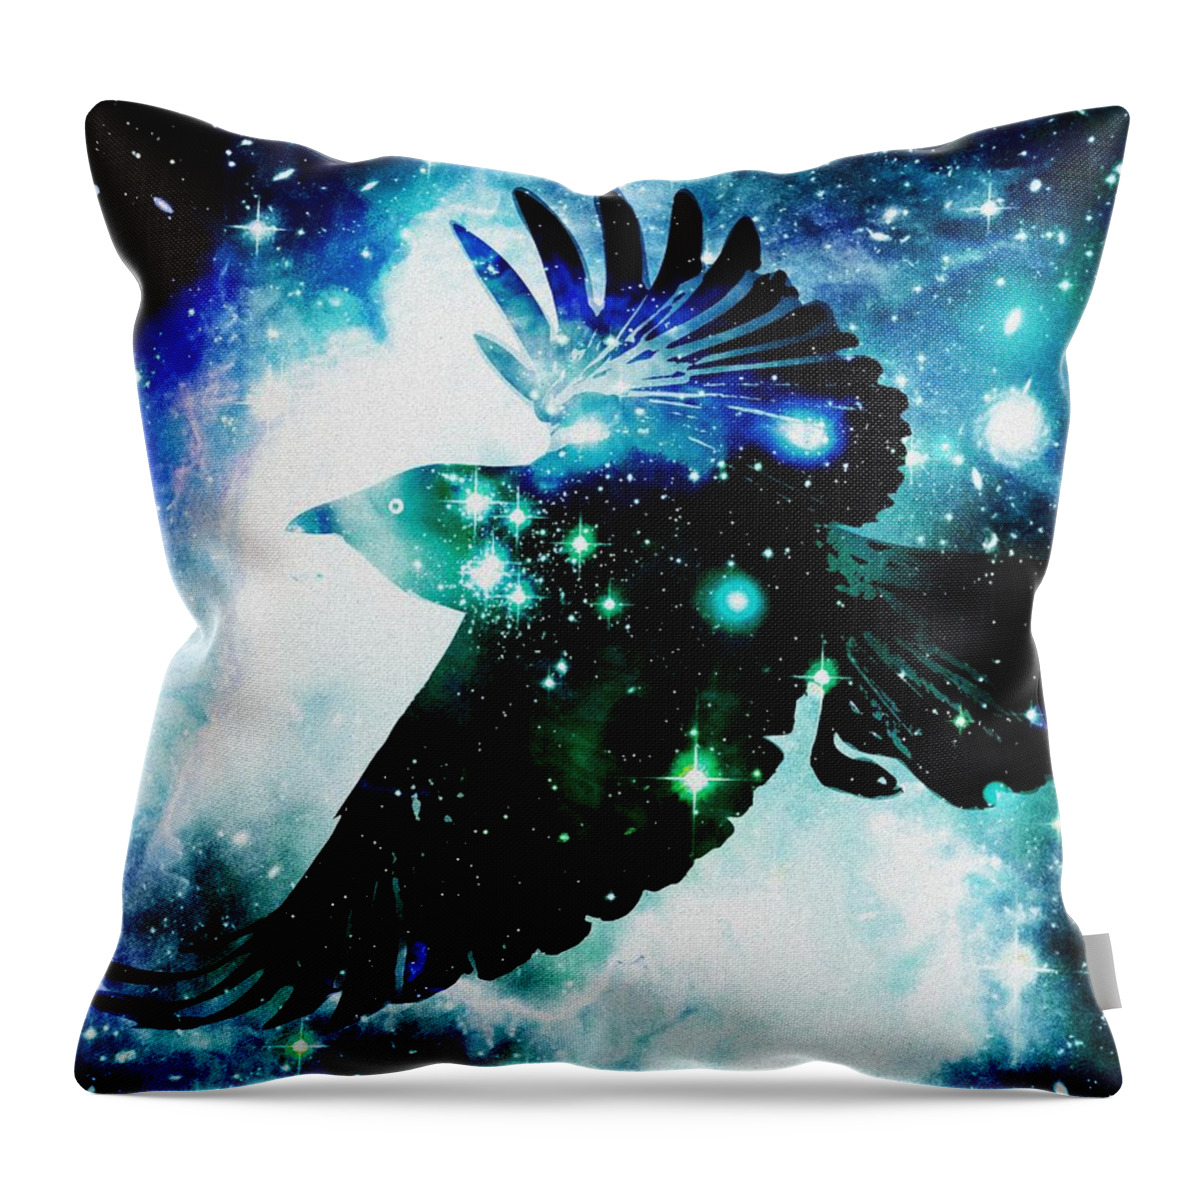 Malakhova Throw Pillow featuring the digital art Raven by Anastasiya Malakhova